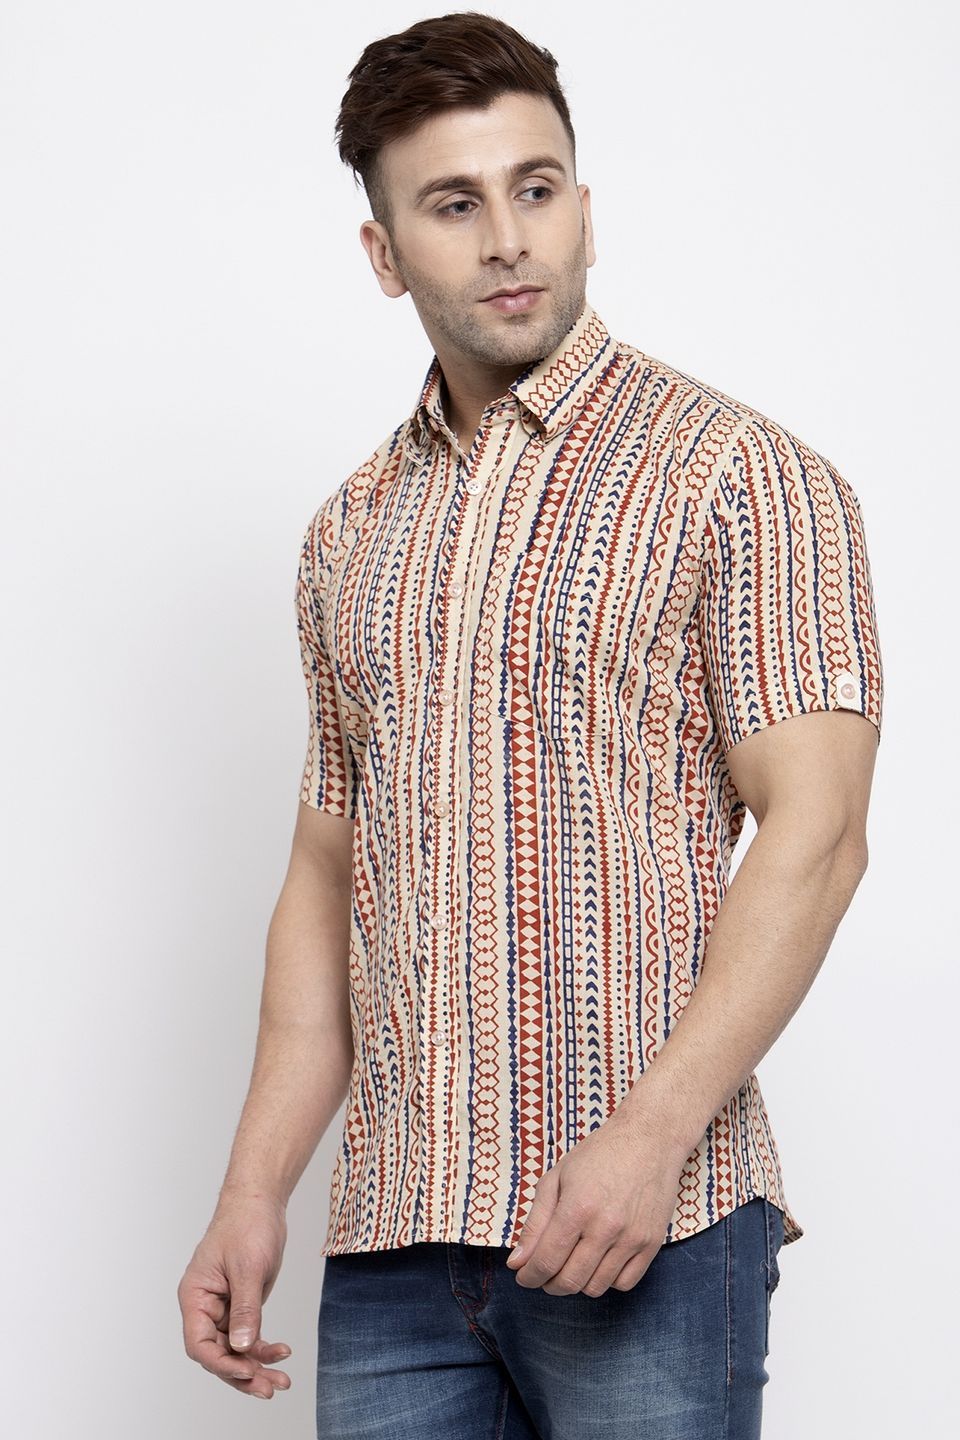 Wintage Men's Jaipur Cotton Tropical Hawaiian Batik Casual Shirt: Cream